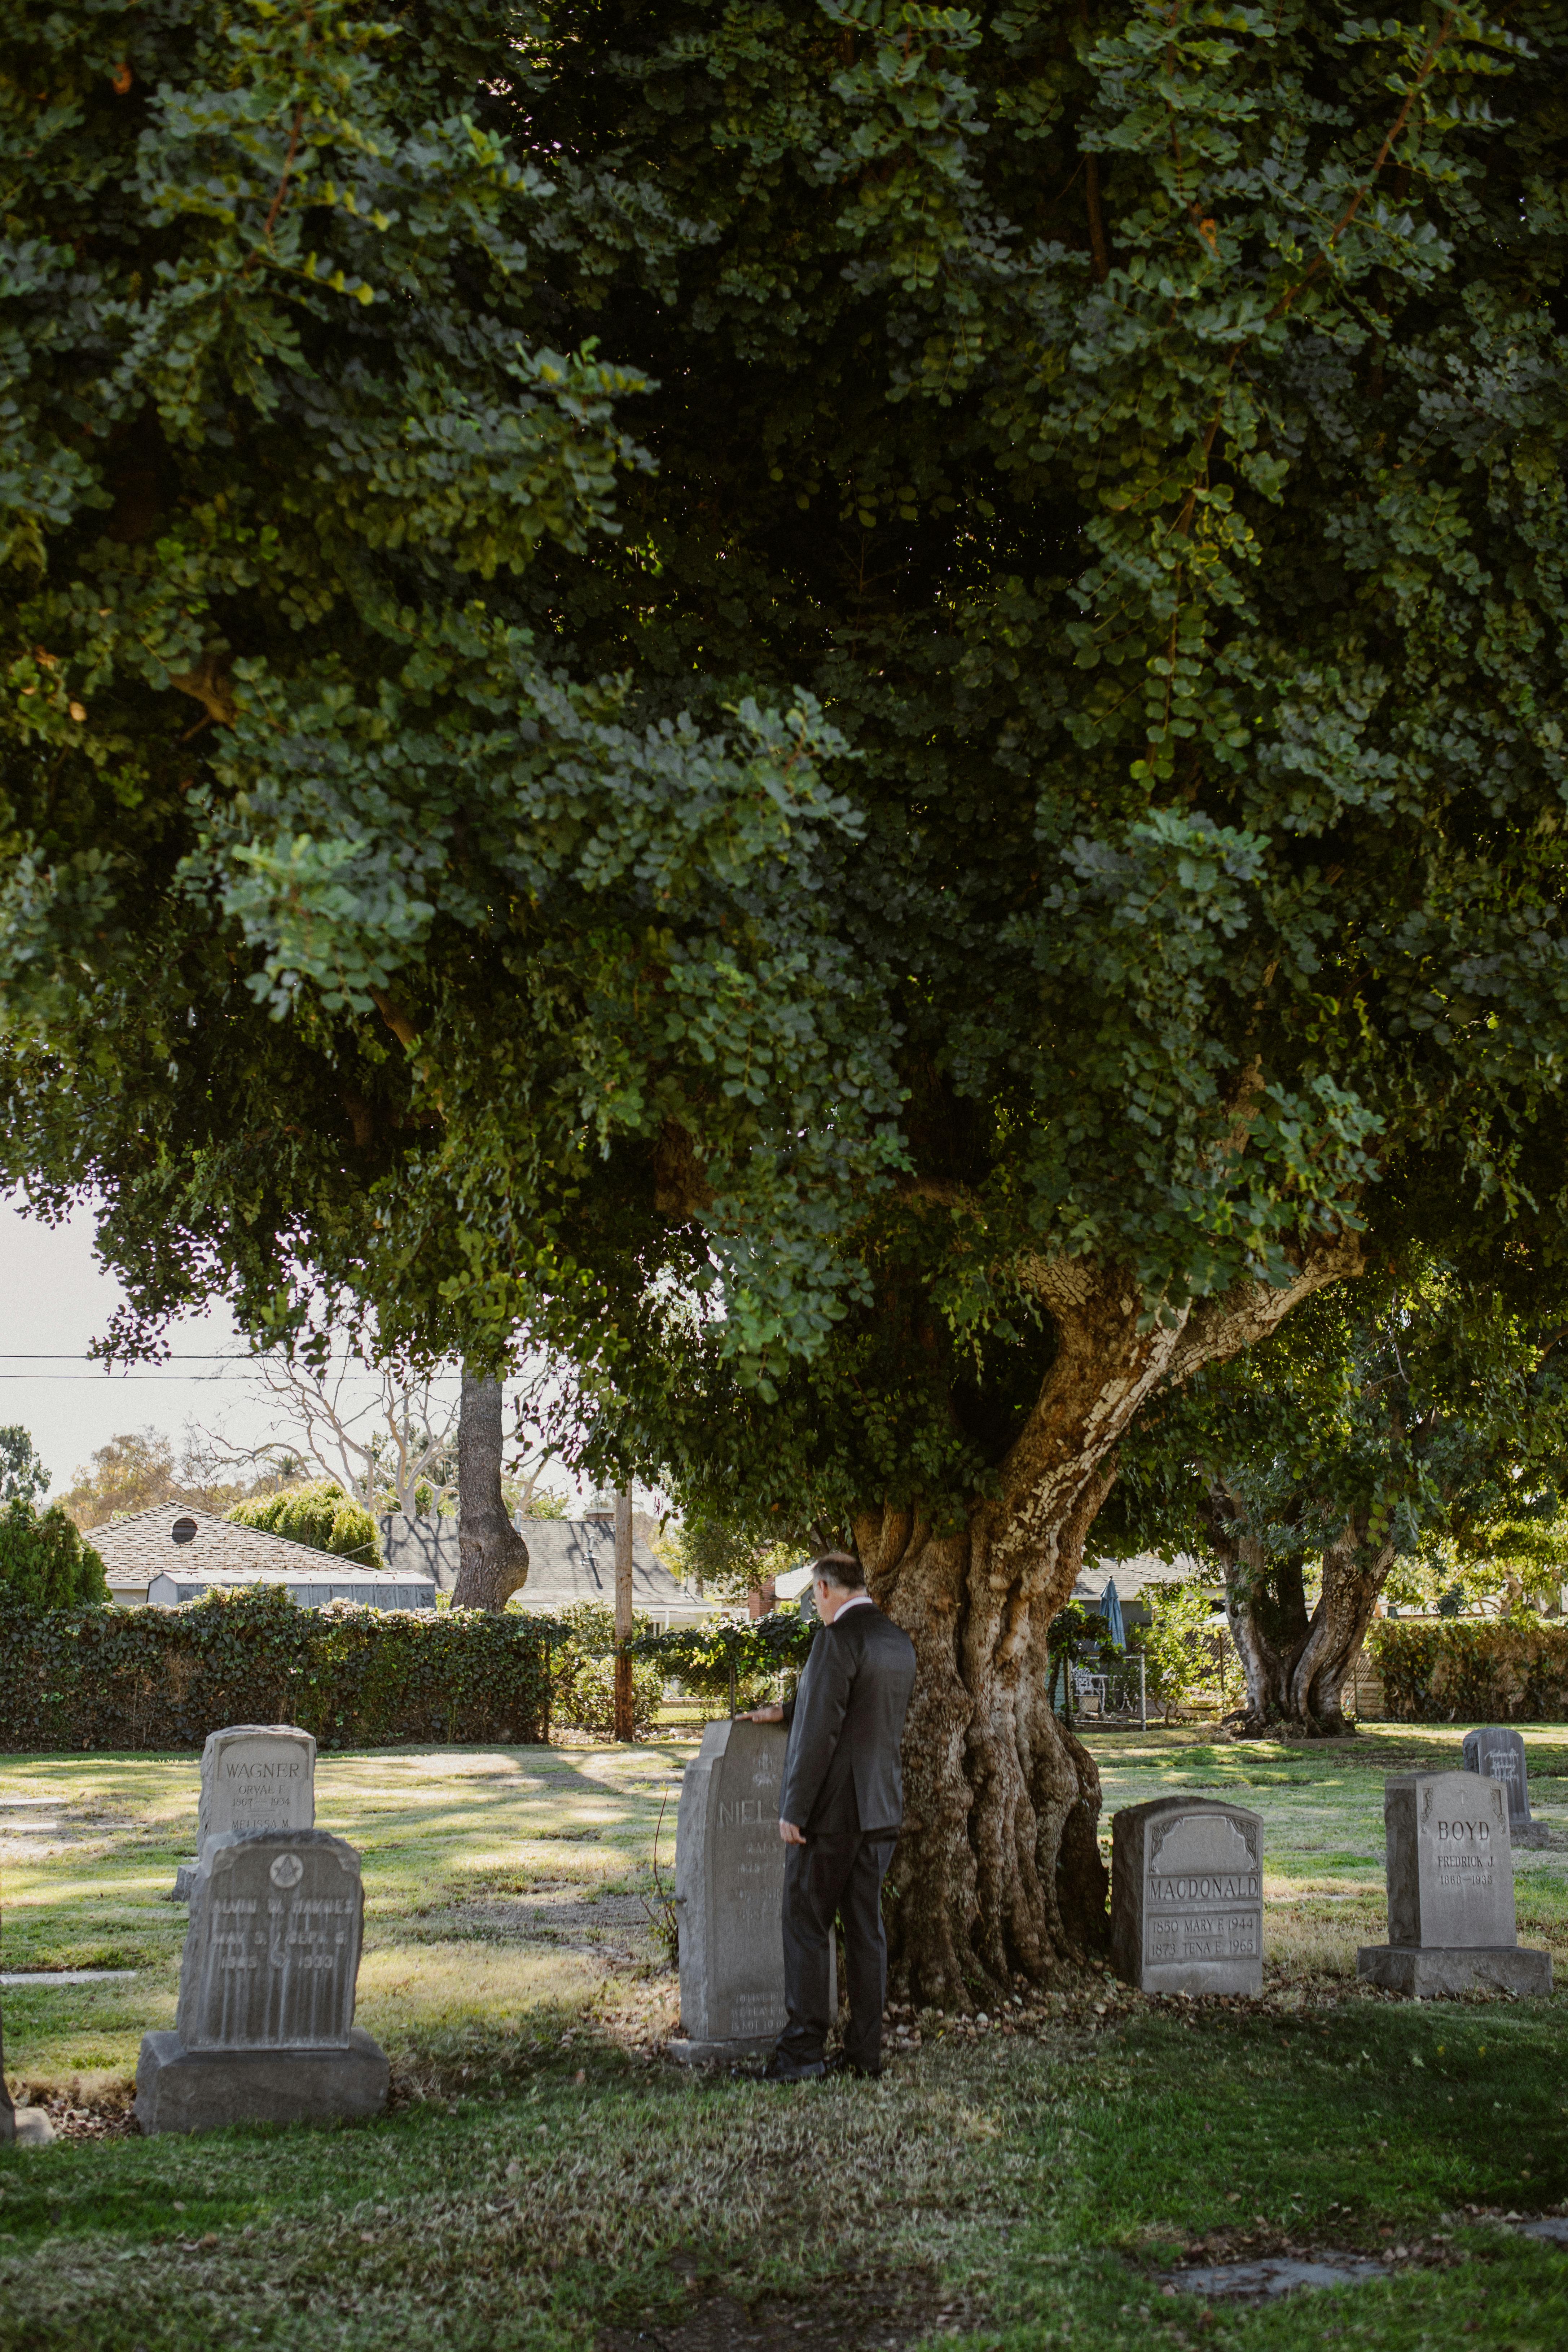 A man by a grave | Source: Pexels